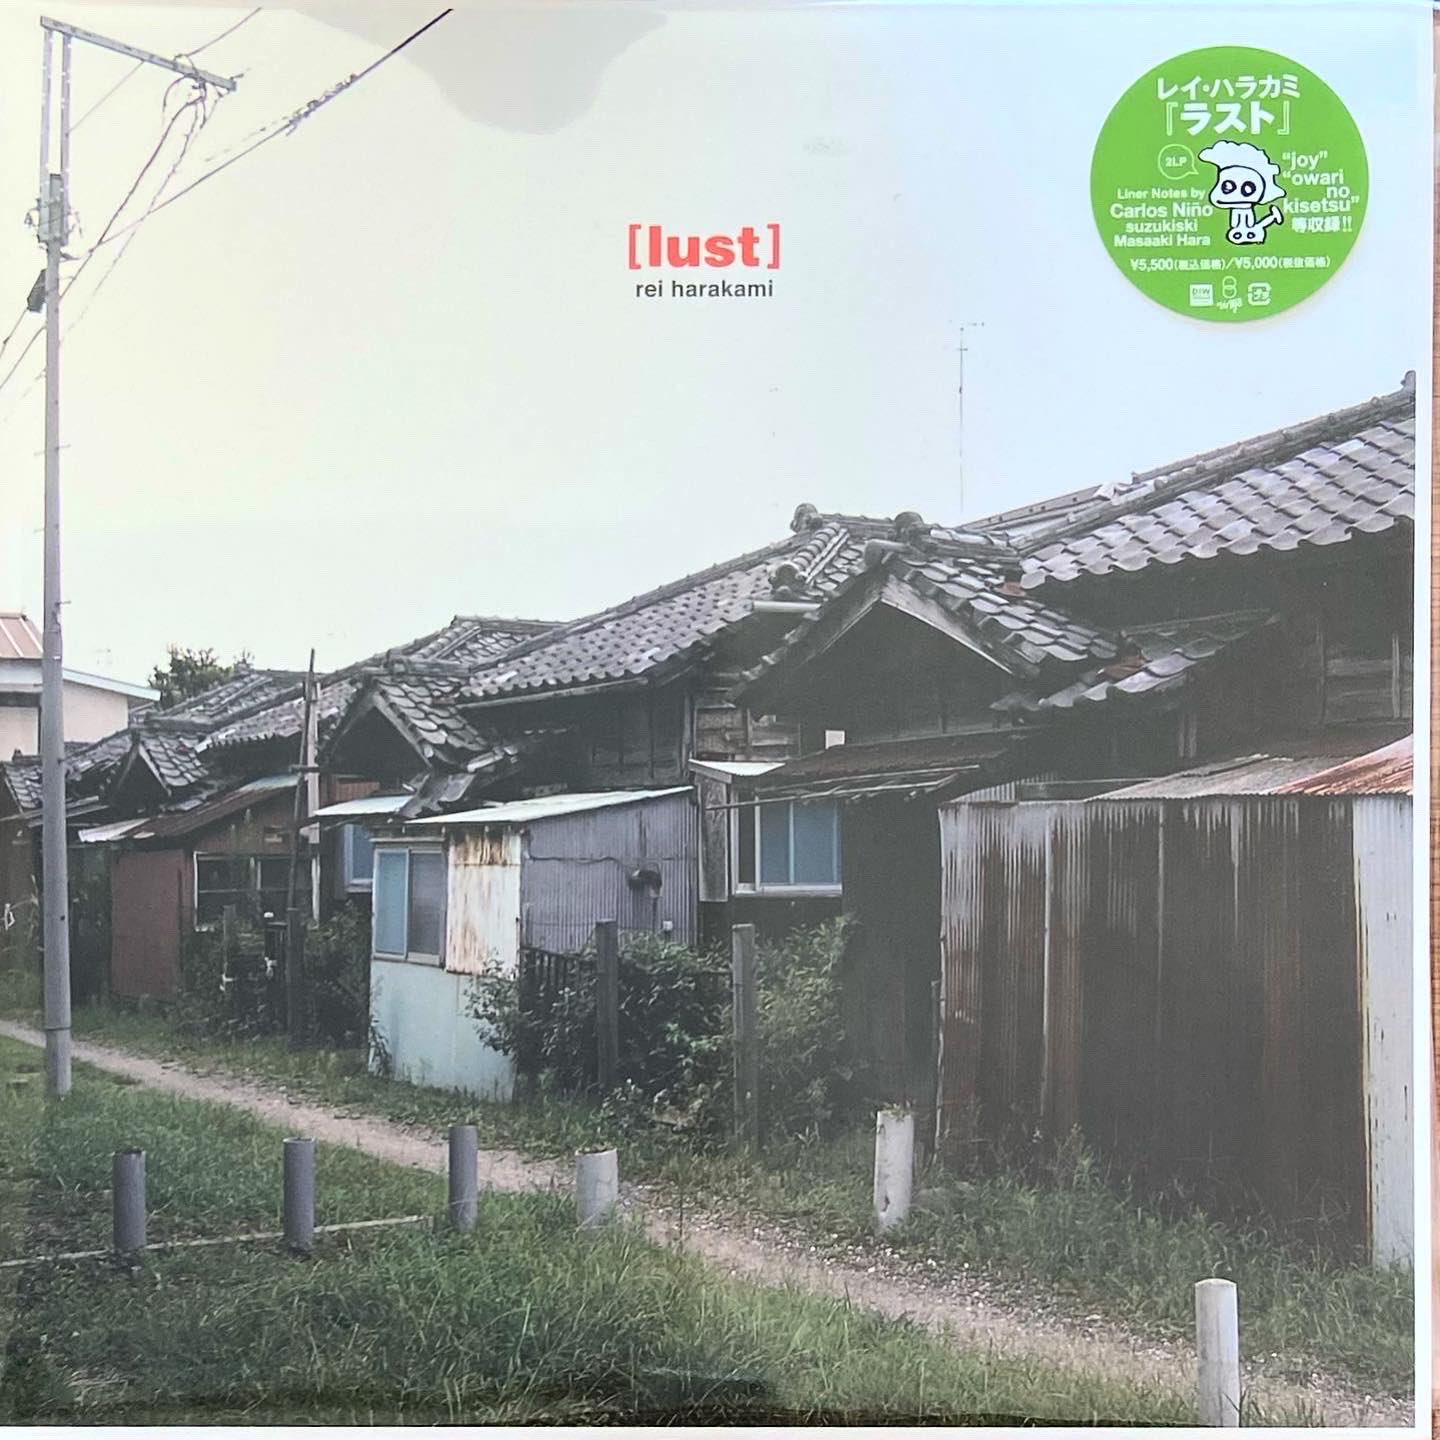 rei harakami 『lust』2016初回オリジナル 限定盤 レコード 格安 48.0 